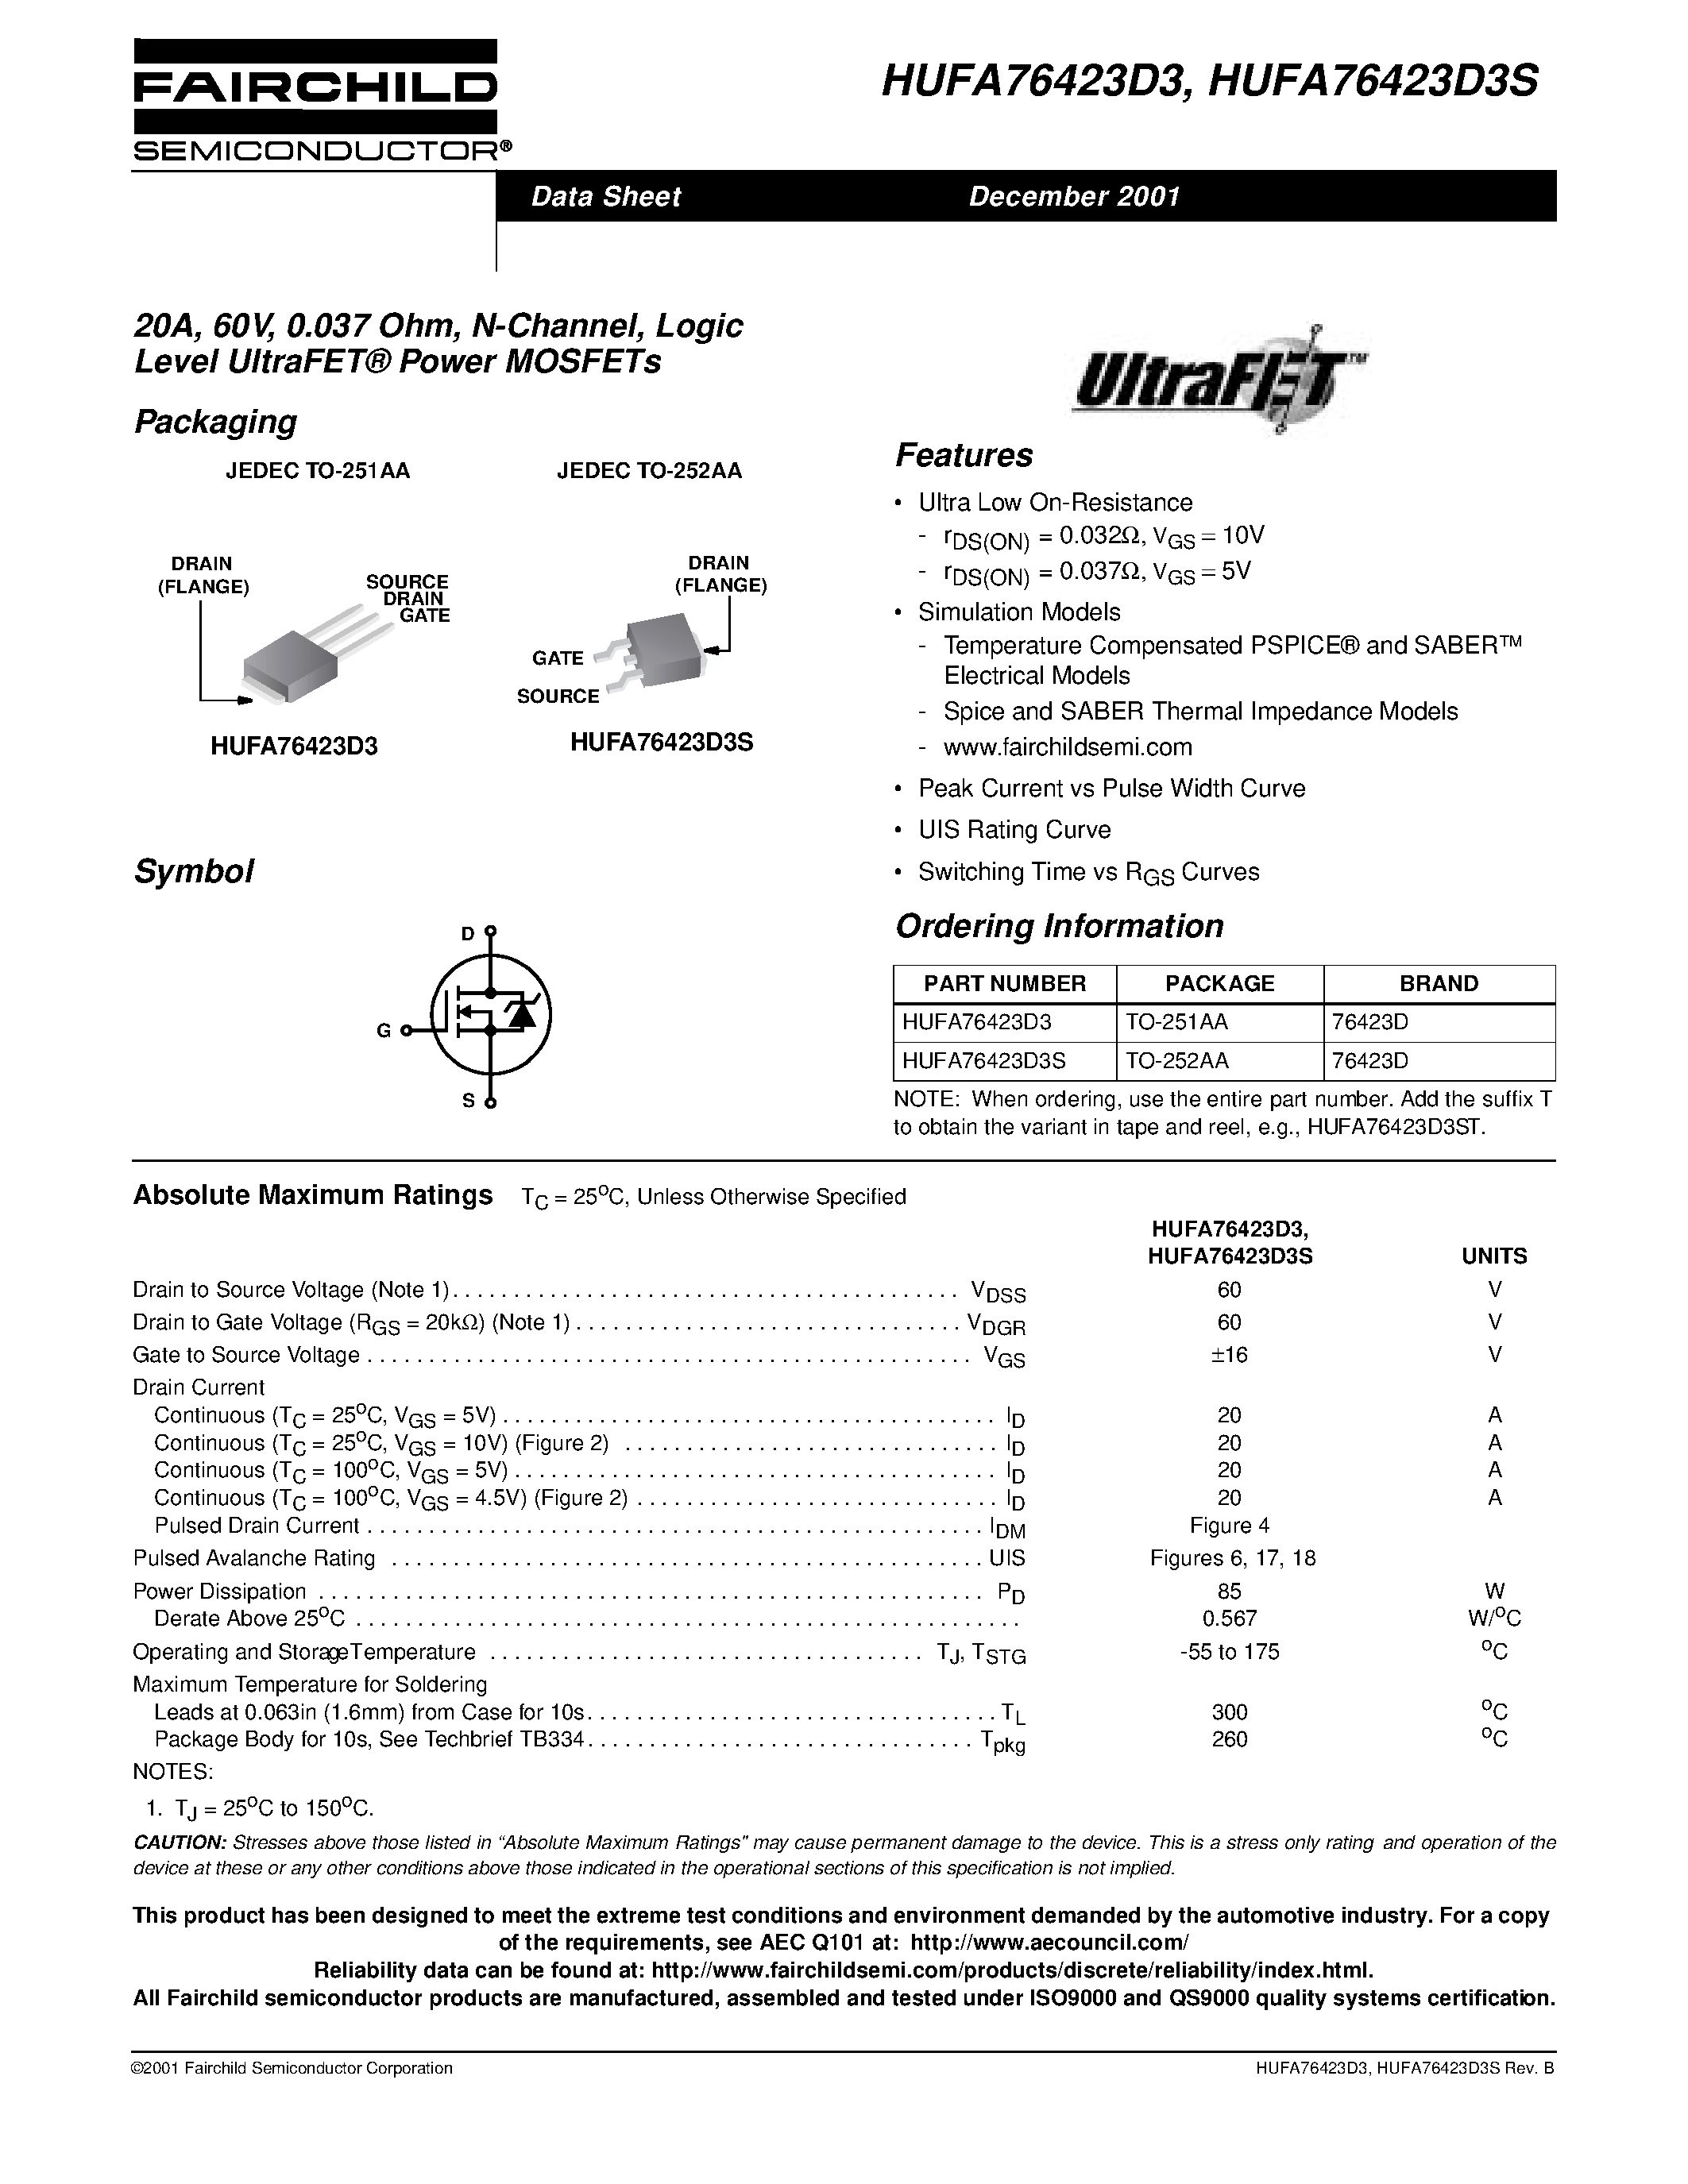 Даташит HUFA76423D3S - 20A/ 60V/ 0.037 Ohm/ N-Channel/ Logic Level UltraFET Power MOSFETs страница 1